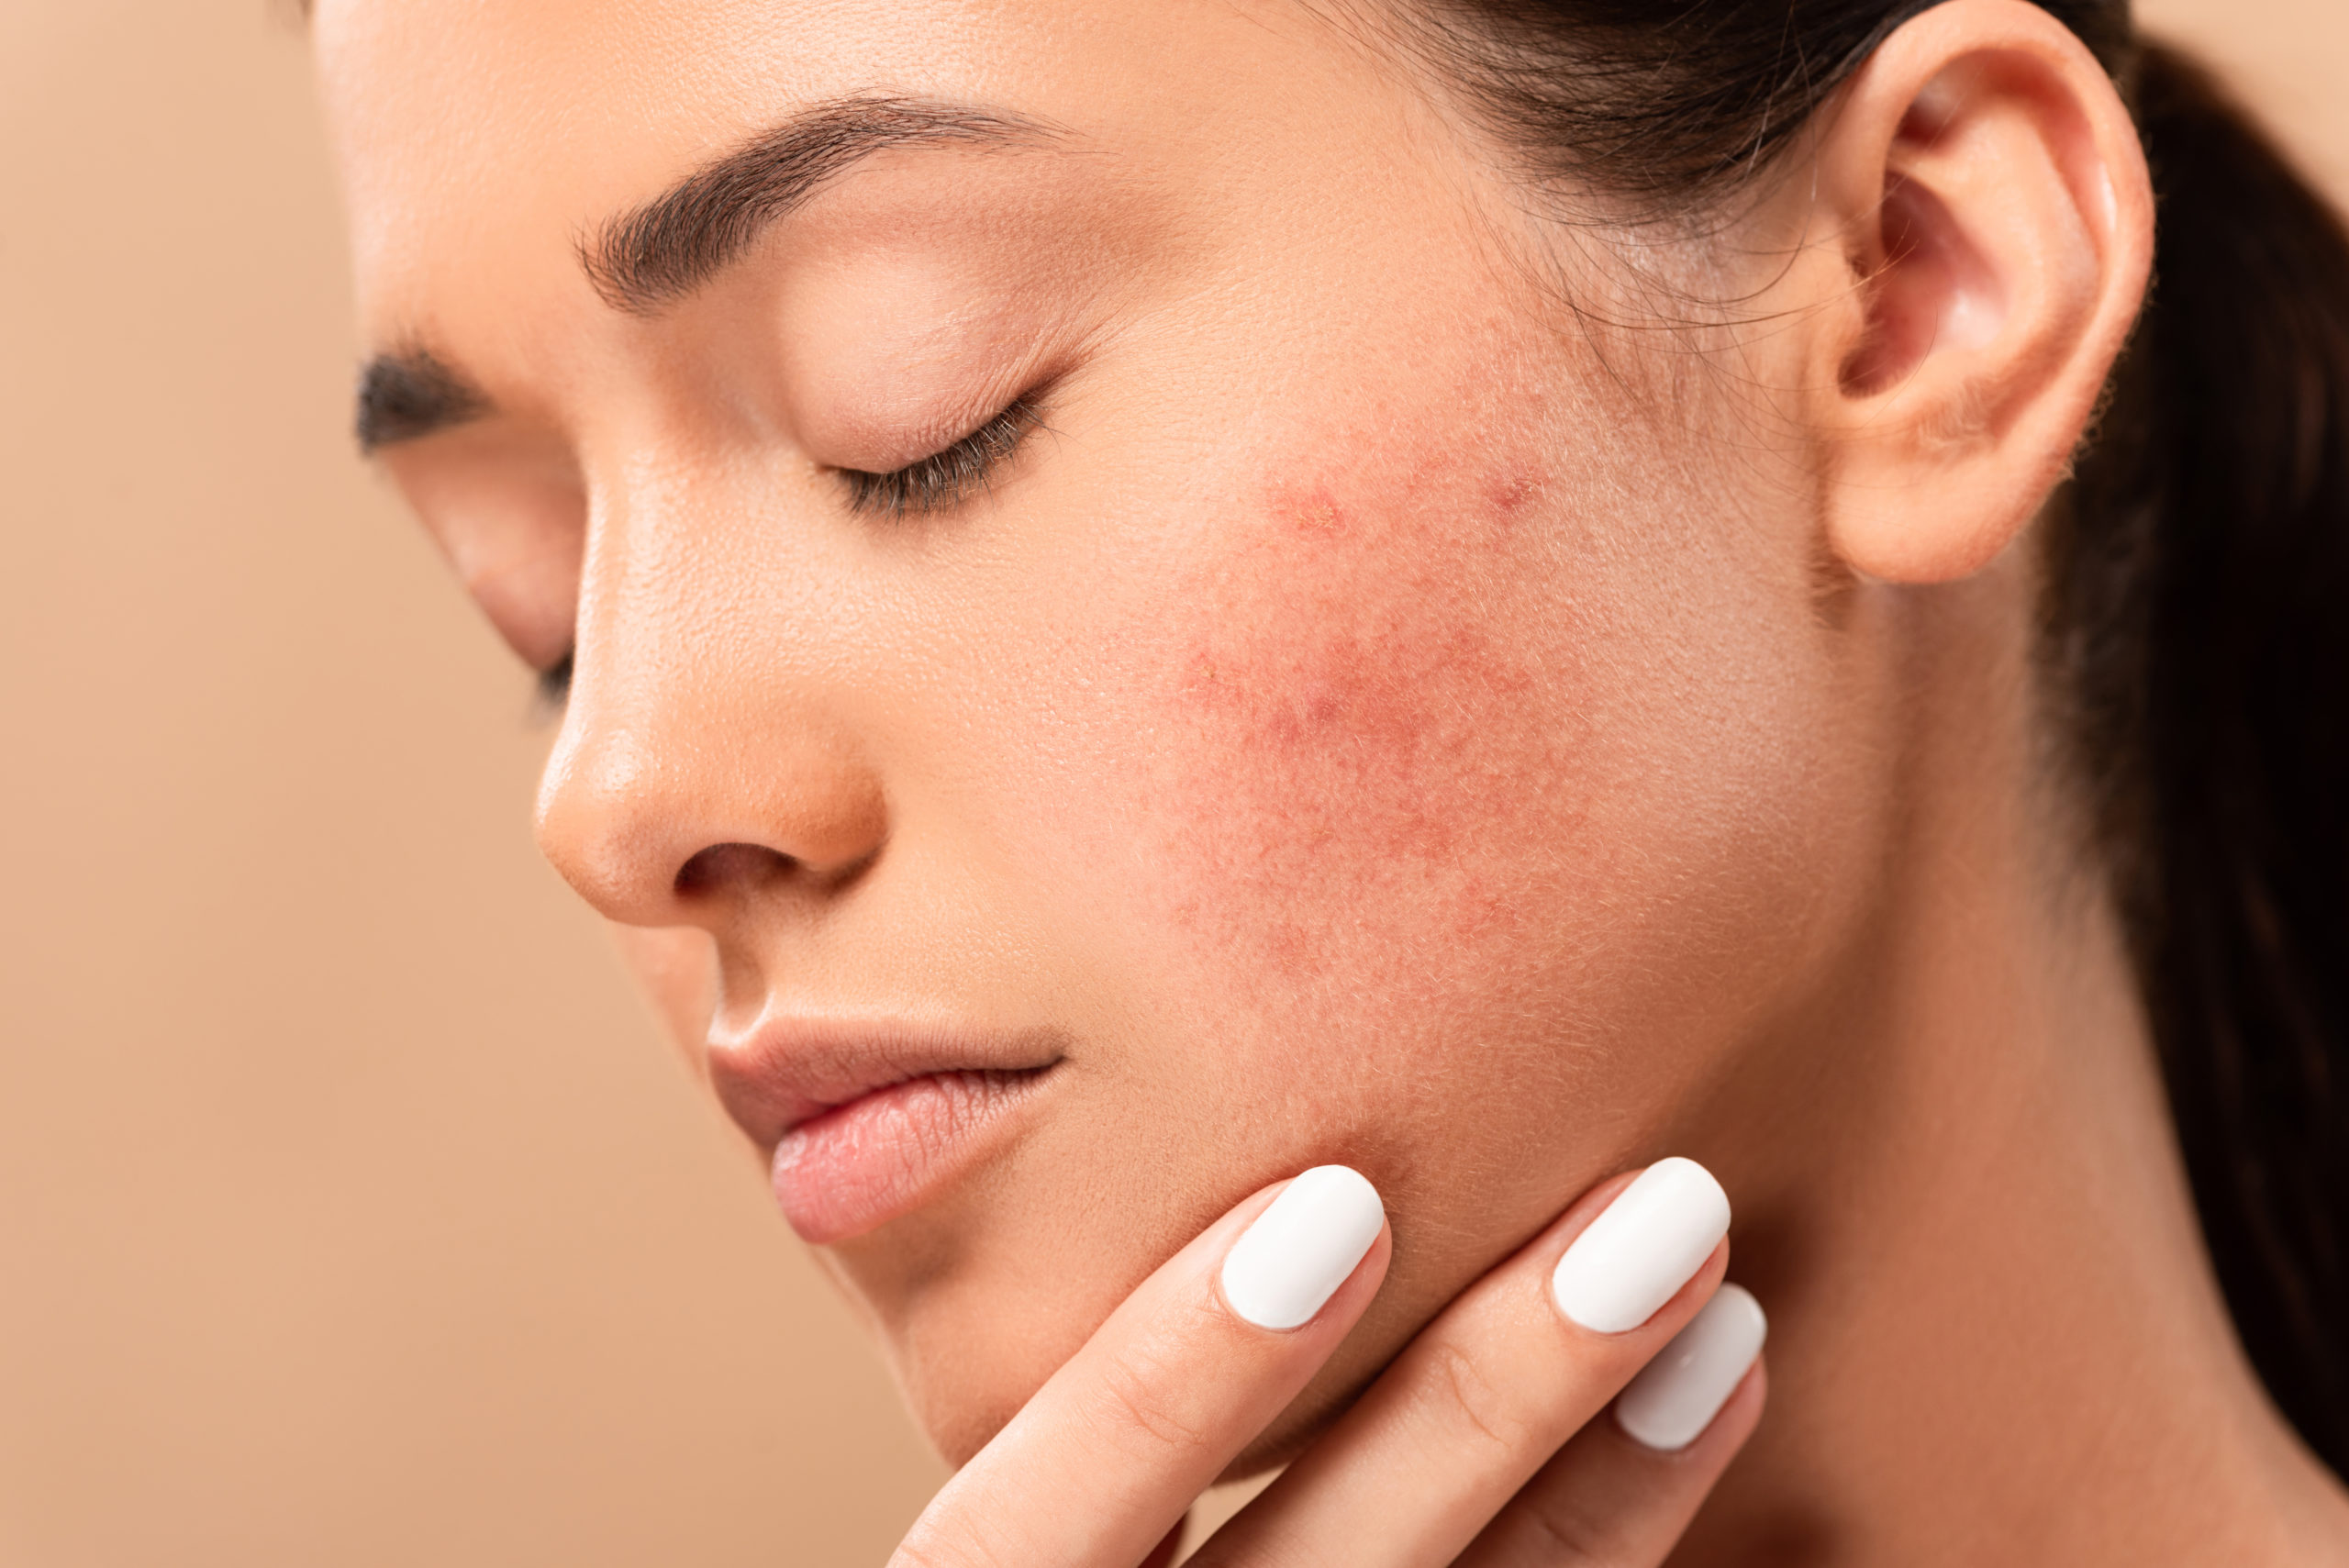 Do Acne Scars Ever Really Go Away?